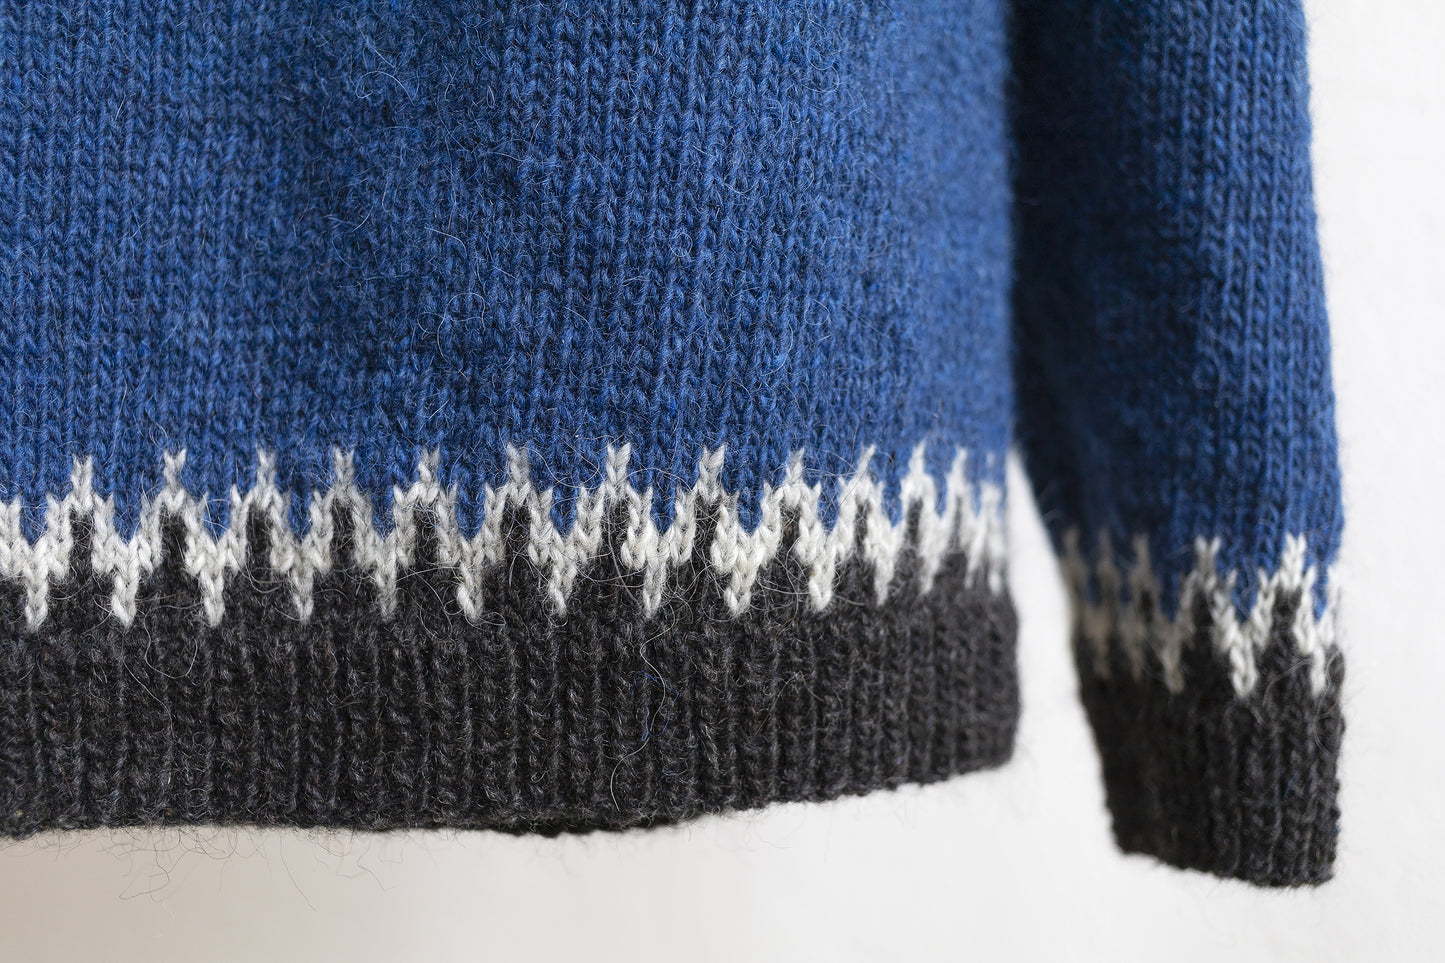 ODIN Icelandic Lopapeysa Sweater Knitting Pattern